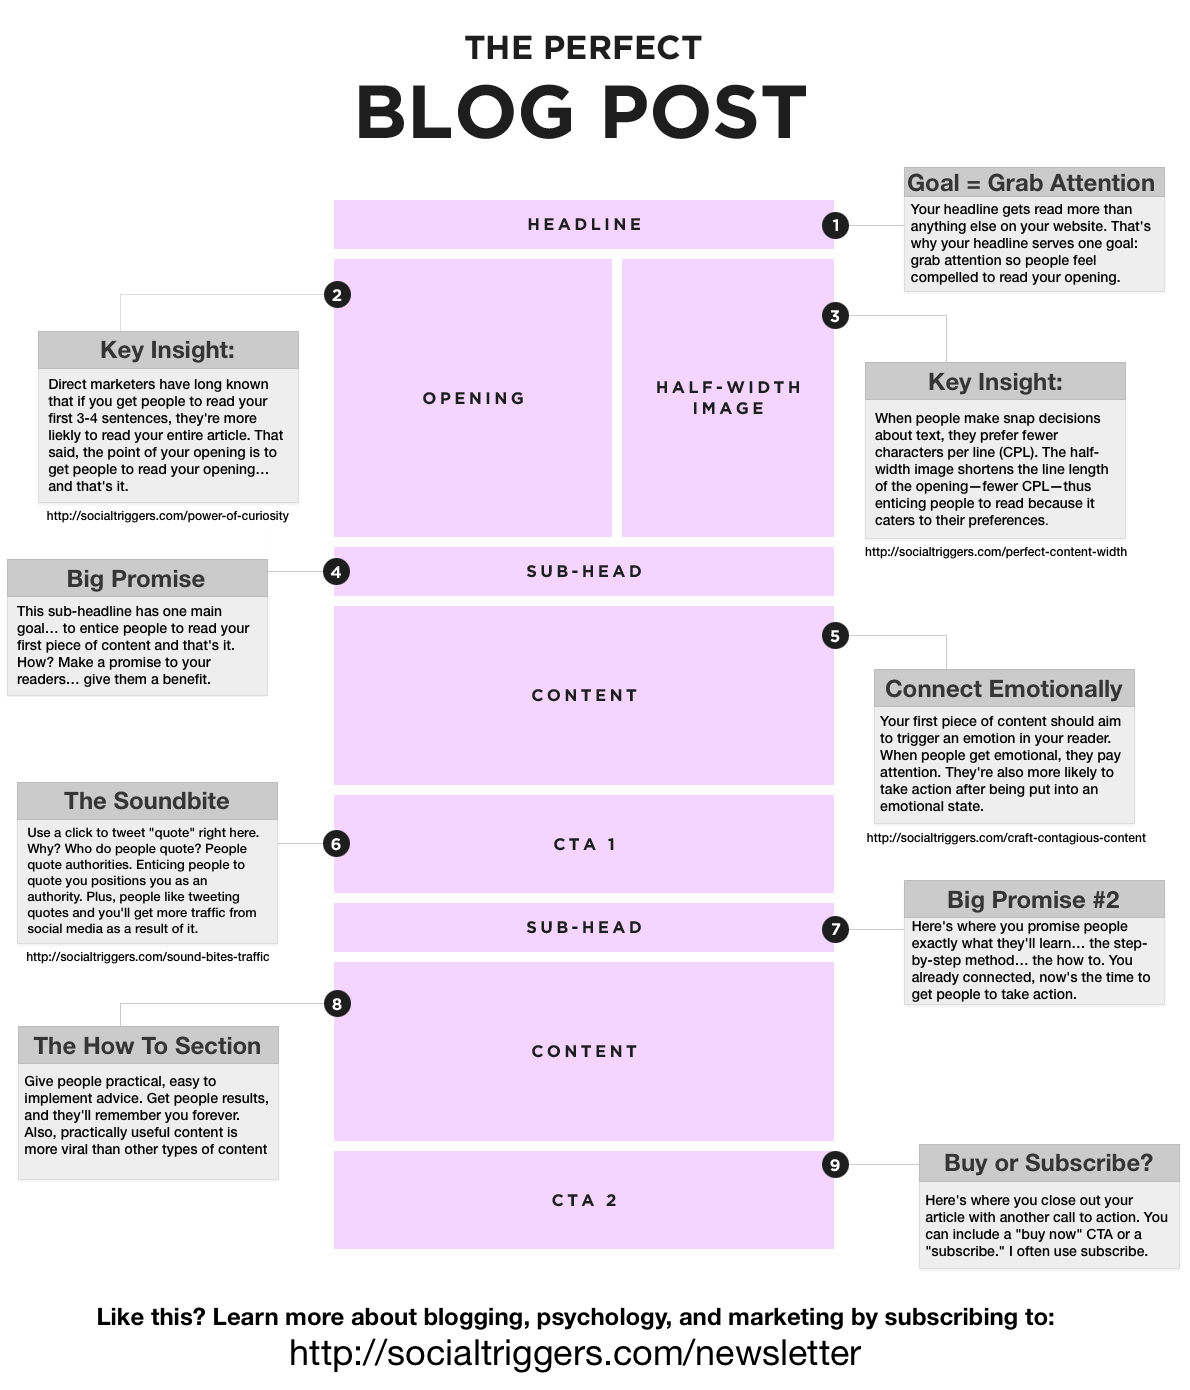 define blogging essay